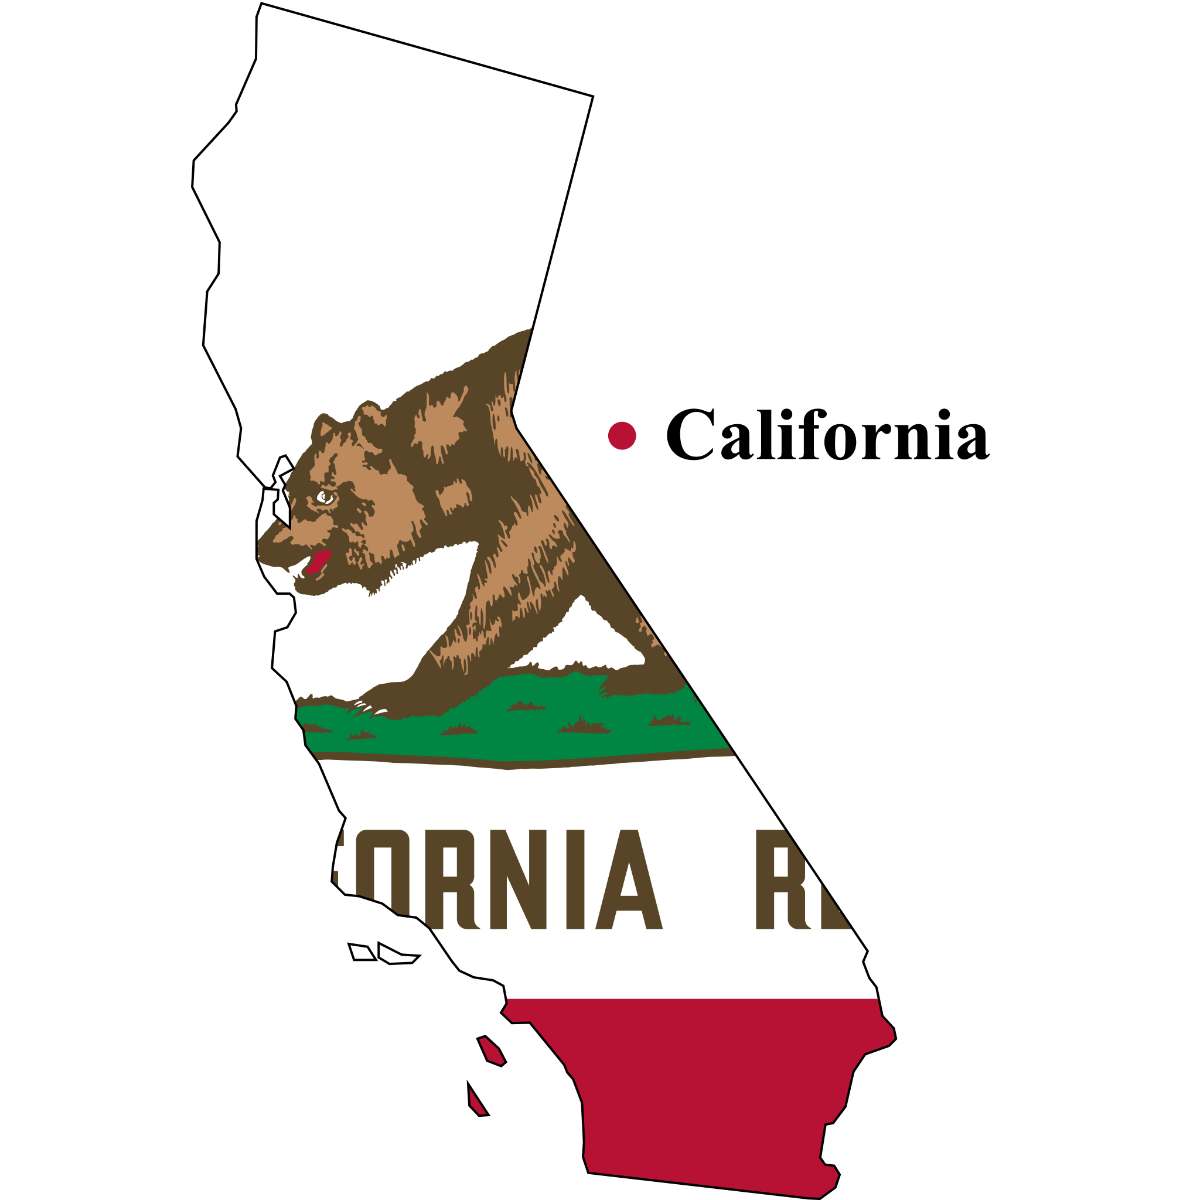 California State map cutout with California flag superimposed